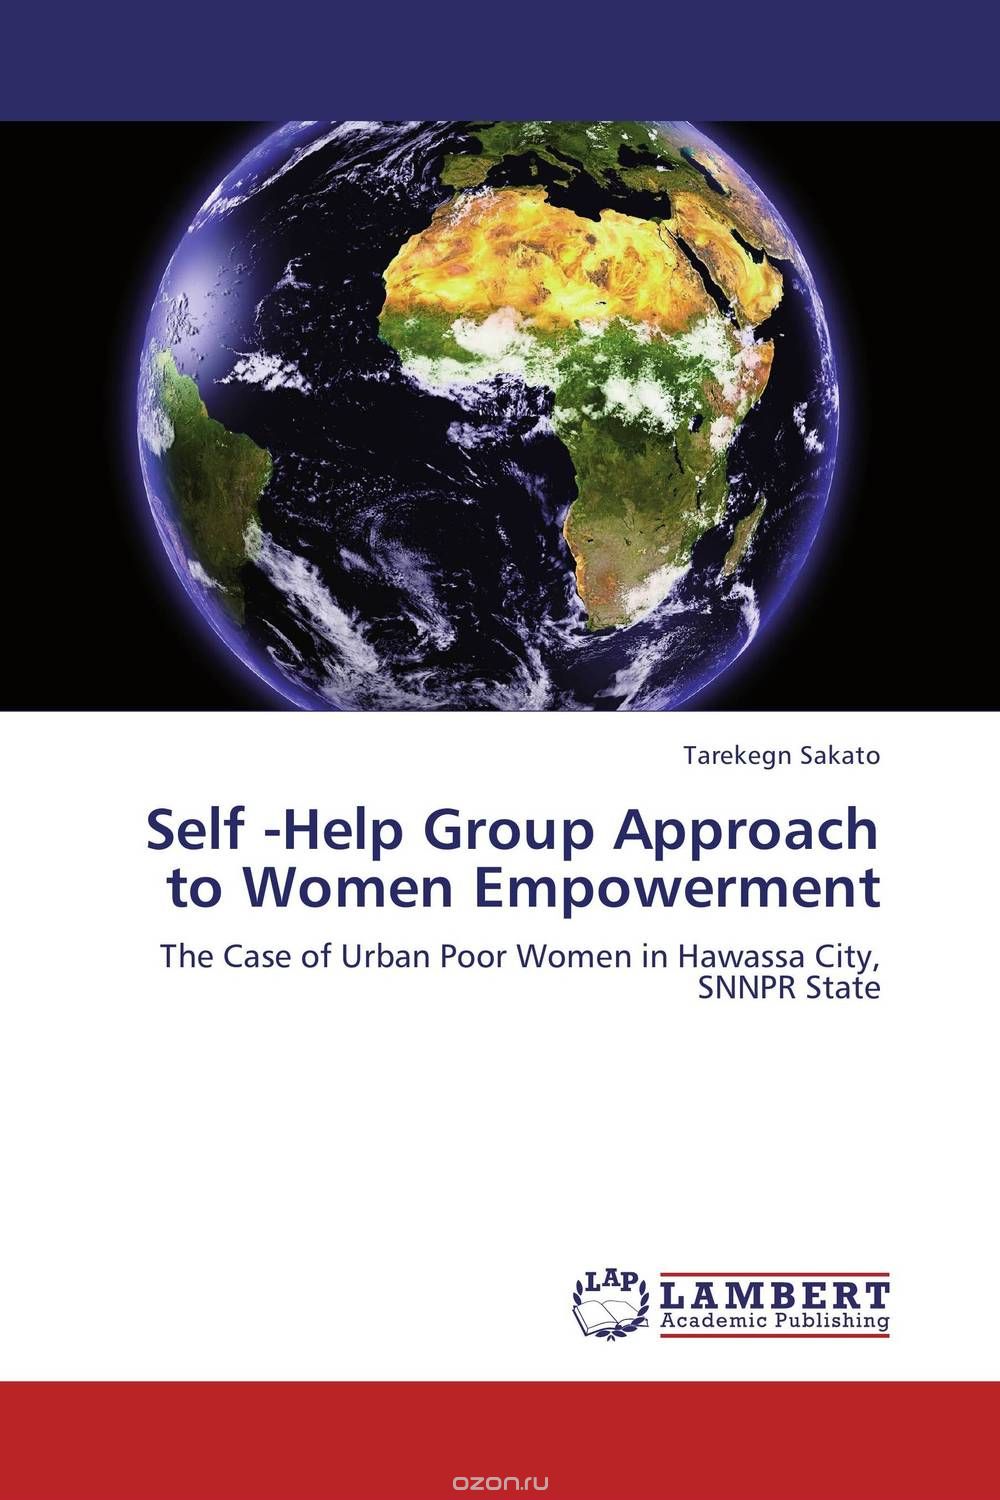 Скачать книгу "Self -Help Group Approach to Women Empowerment"